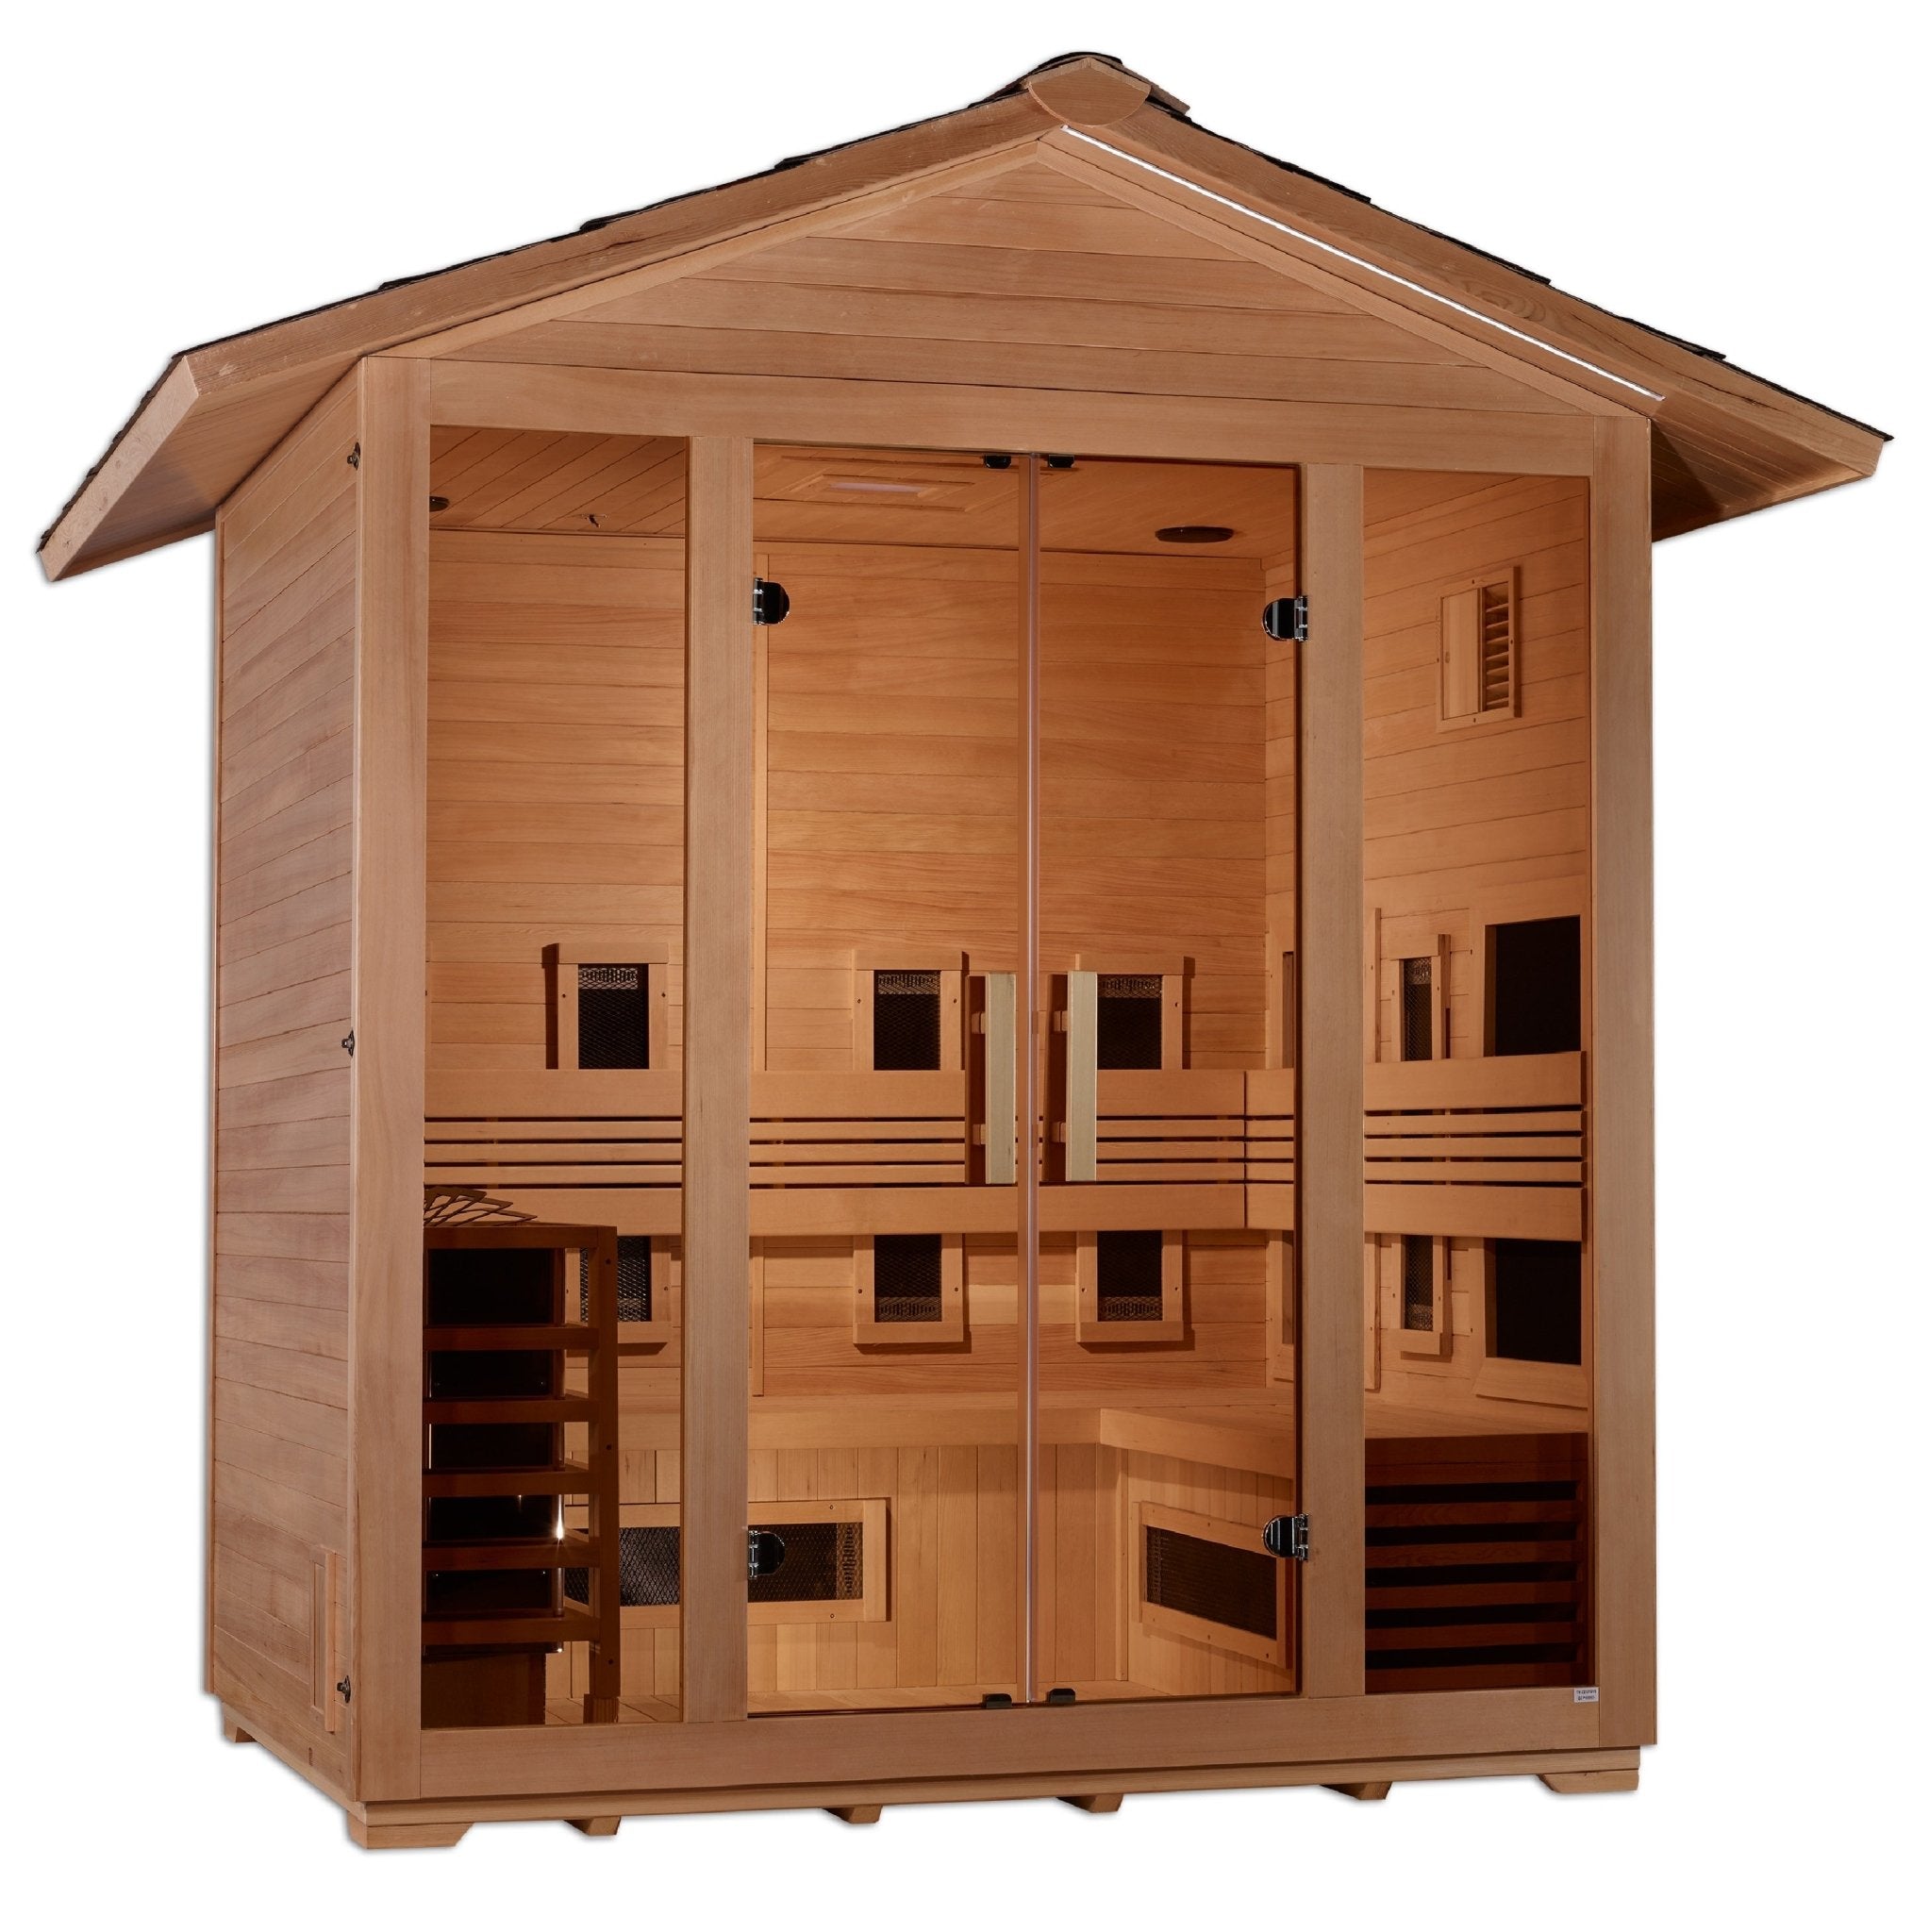 Golden Designs "Gargellen" 4-5 Person Hybrid Outdoor Sauna Full Spectrum Infrared + Traditional - Select Saunas